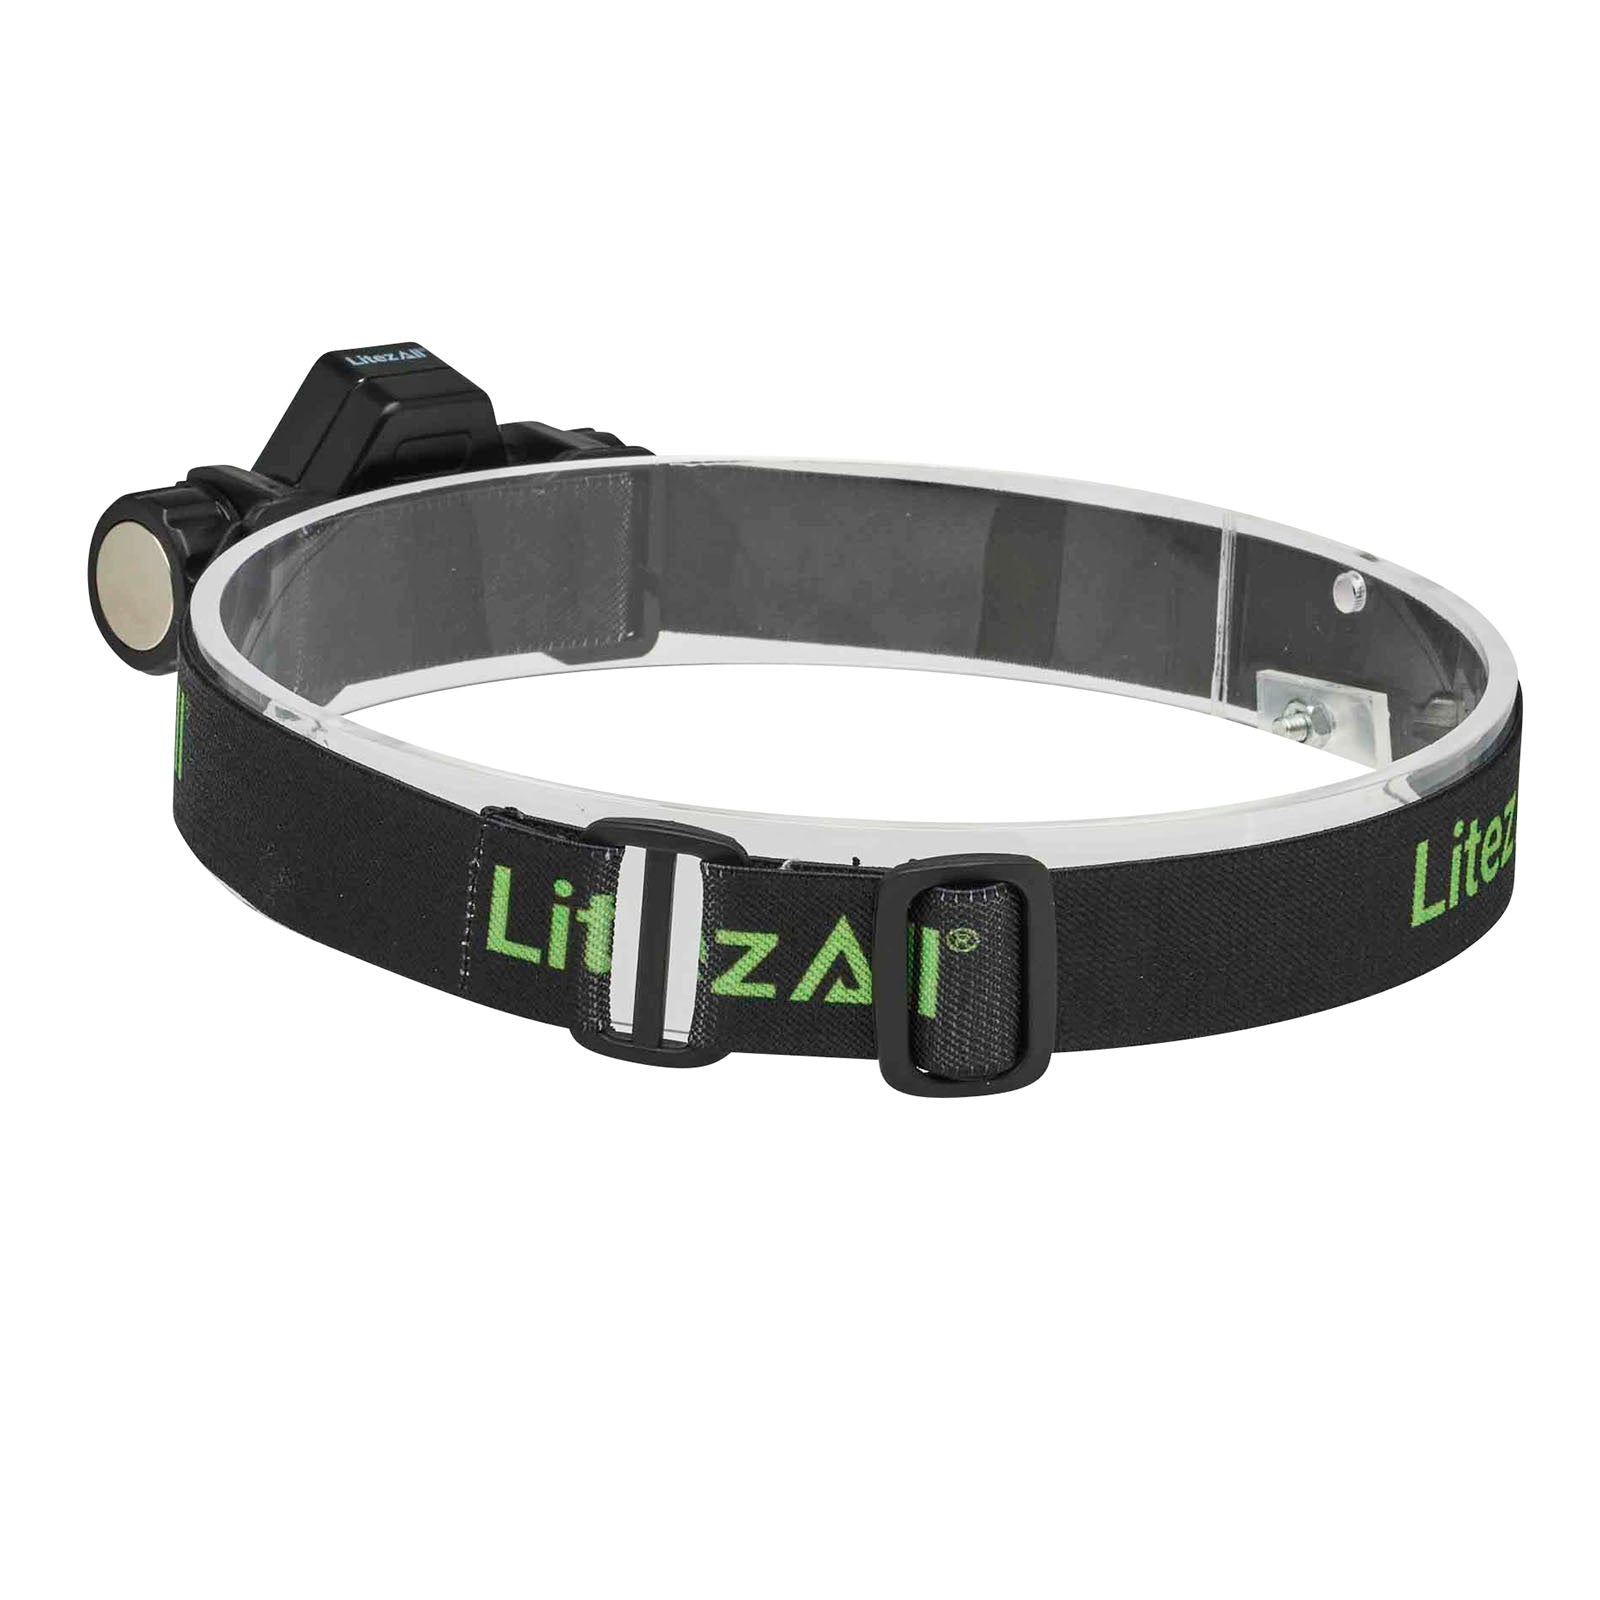 LitezAll Rechargeable Dual Mode Headlamp